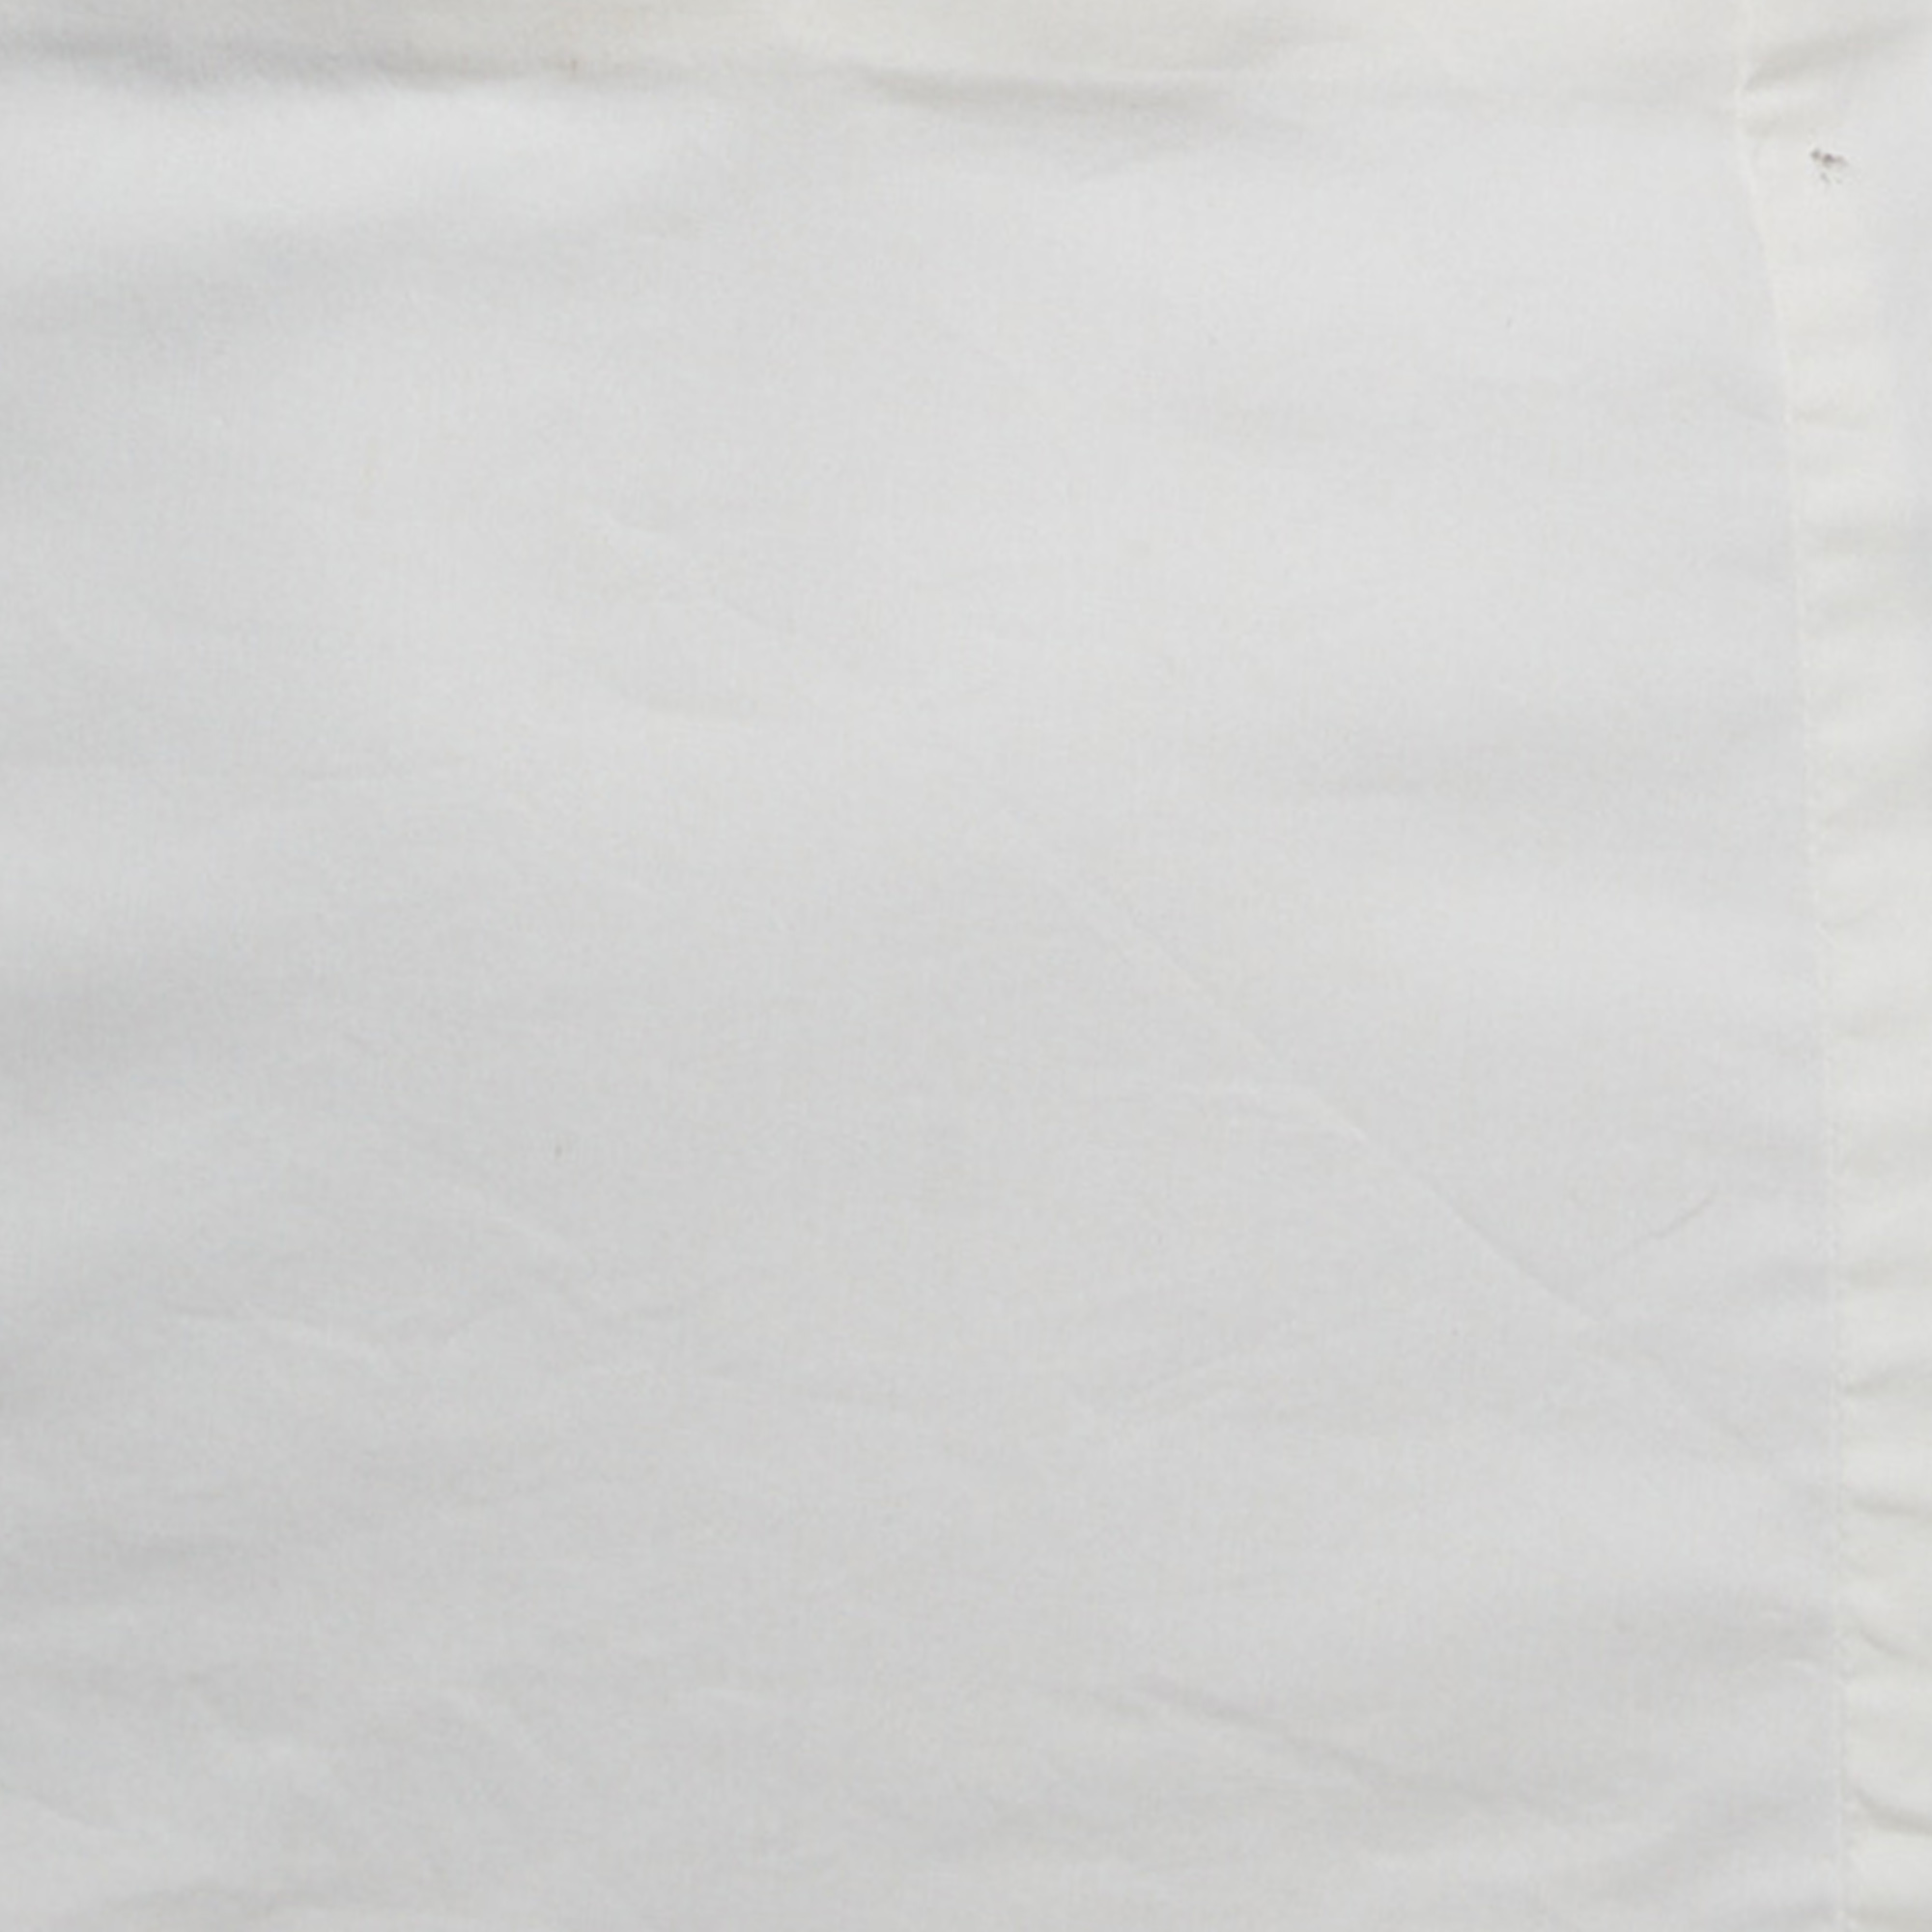 Elisabetta Franchi White Cotton Blend Long Sleeve Top S